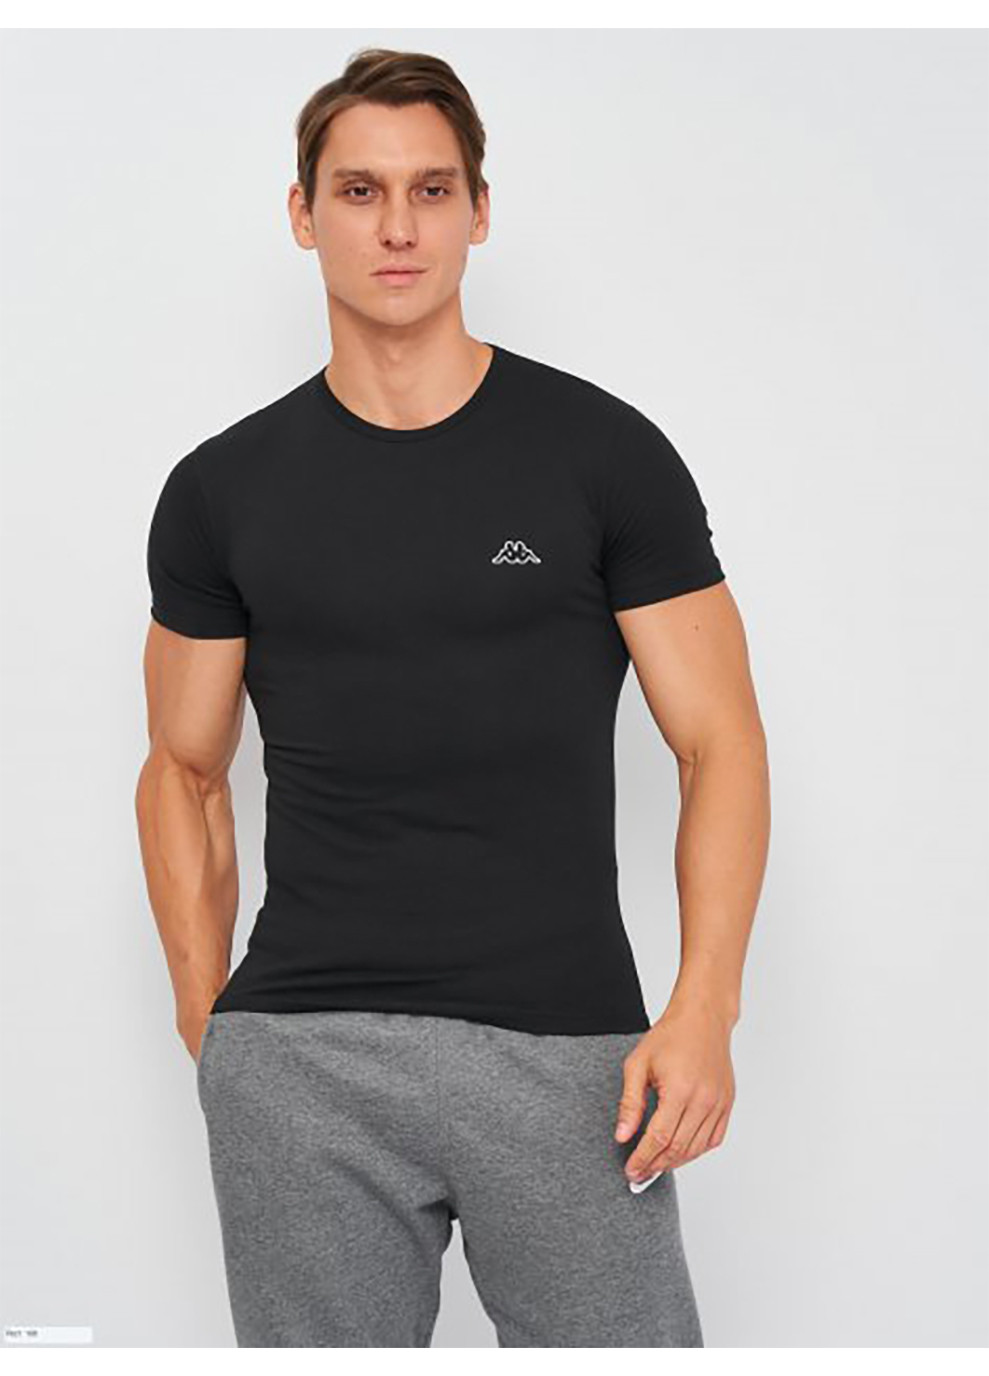 Черная футболка t-shirt mezza manica girocollo черный 2xl муж k1305 nero-2xl Kappa